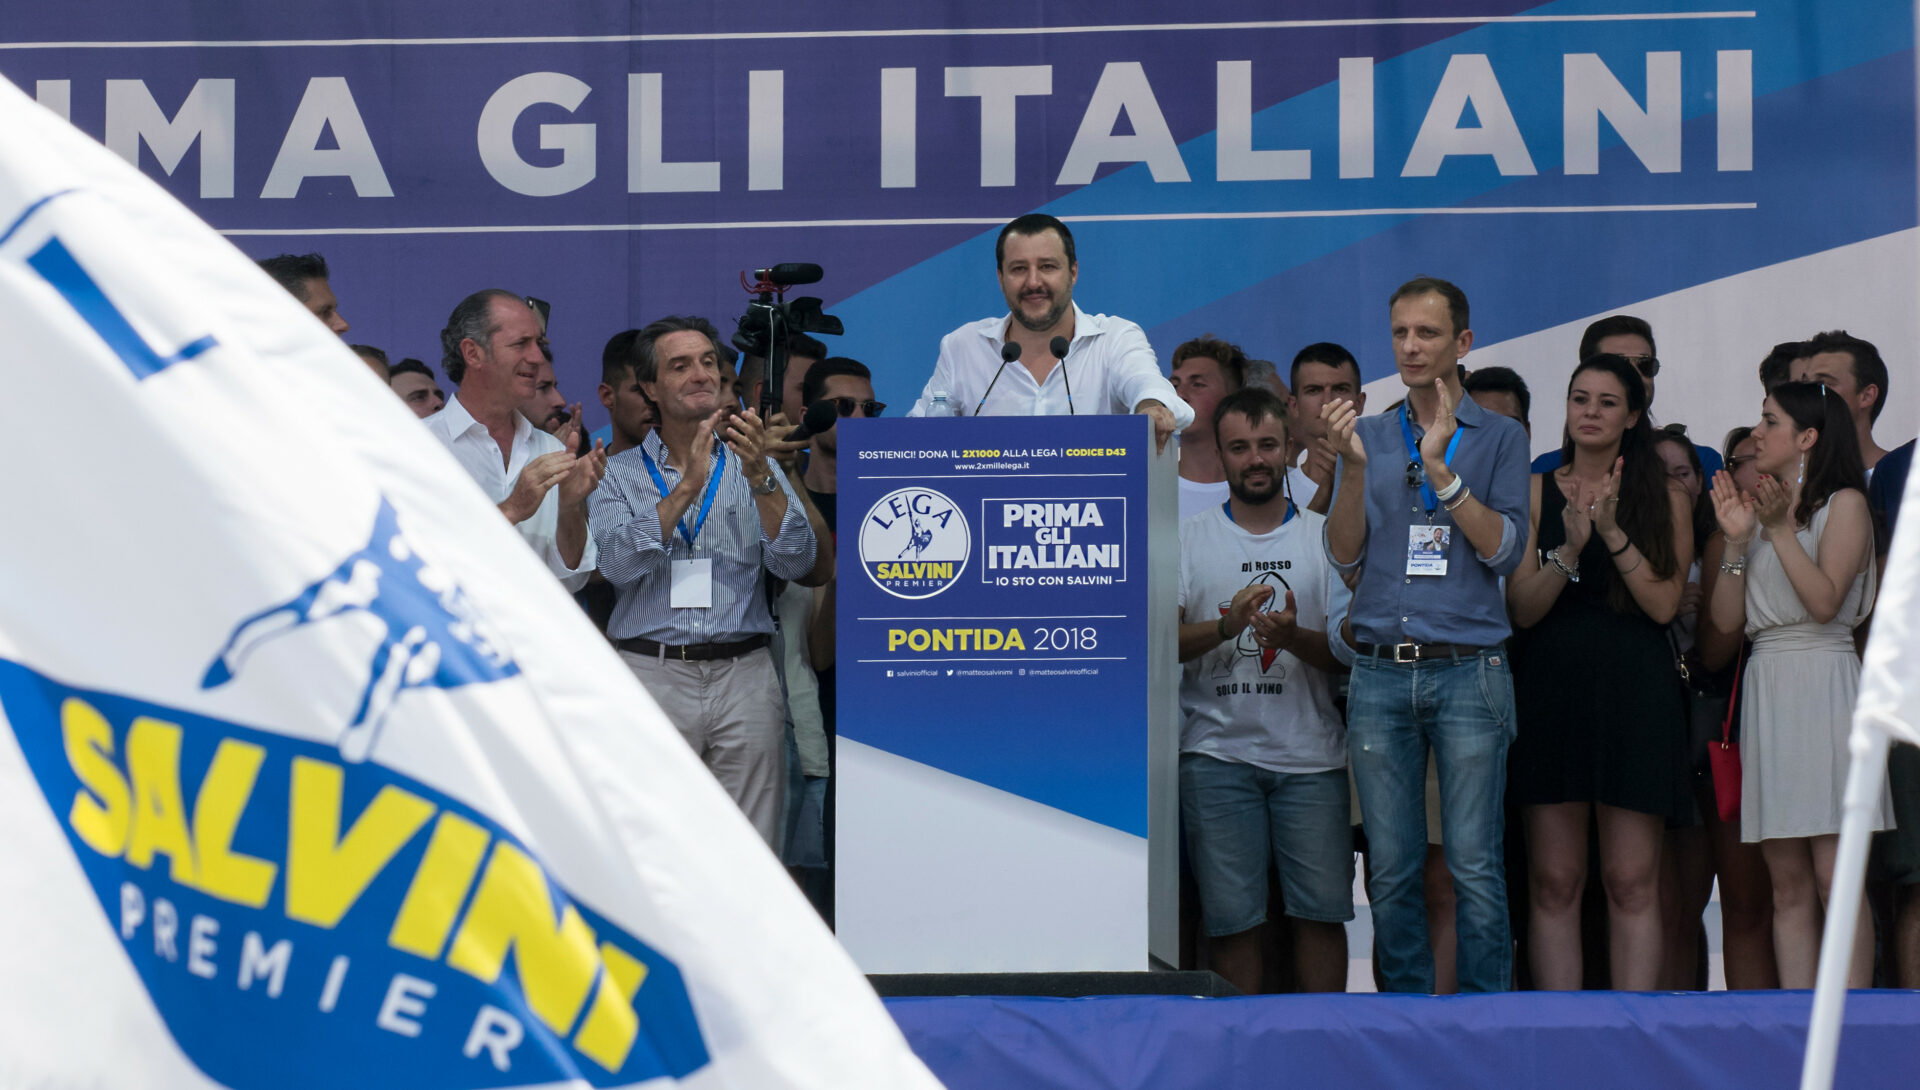 Matteo Salvini to meet with head of Polish ruling party regarding an EU alliance